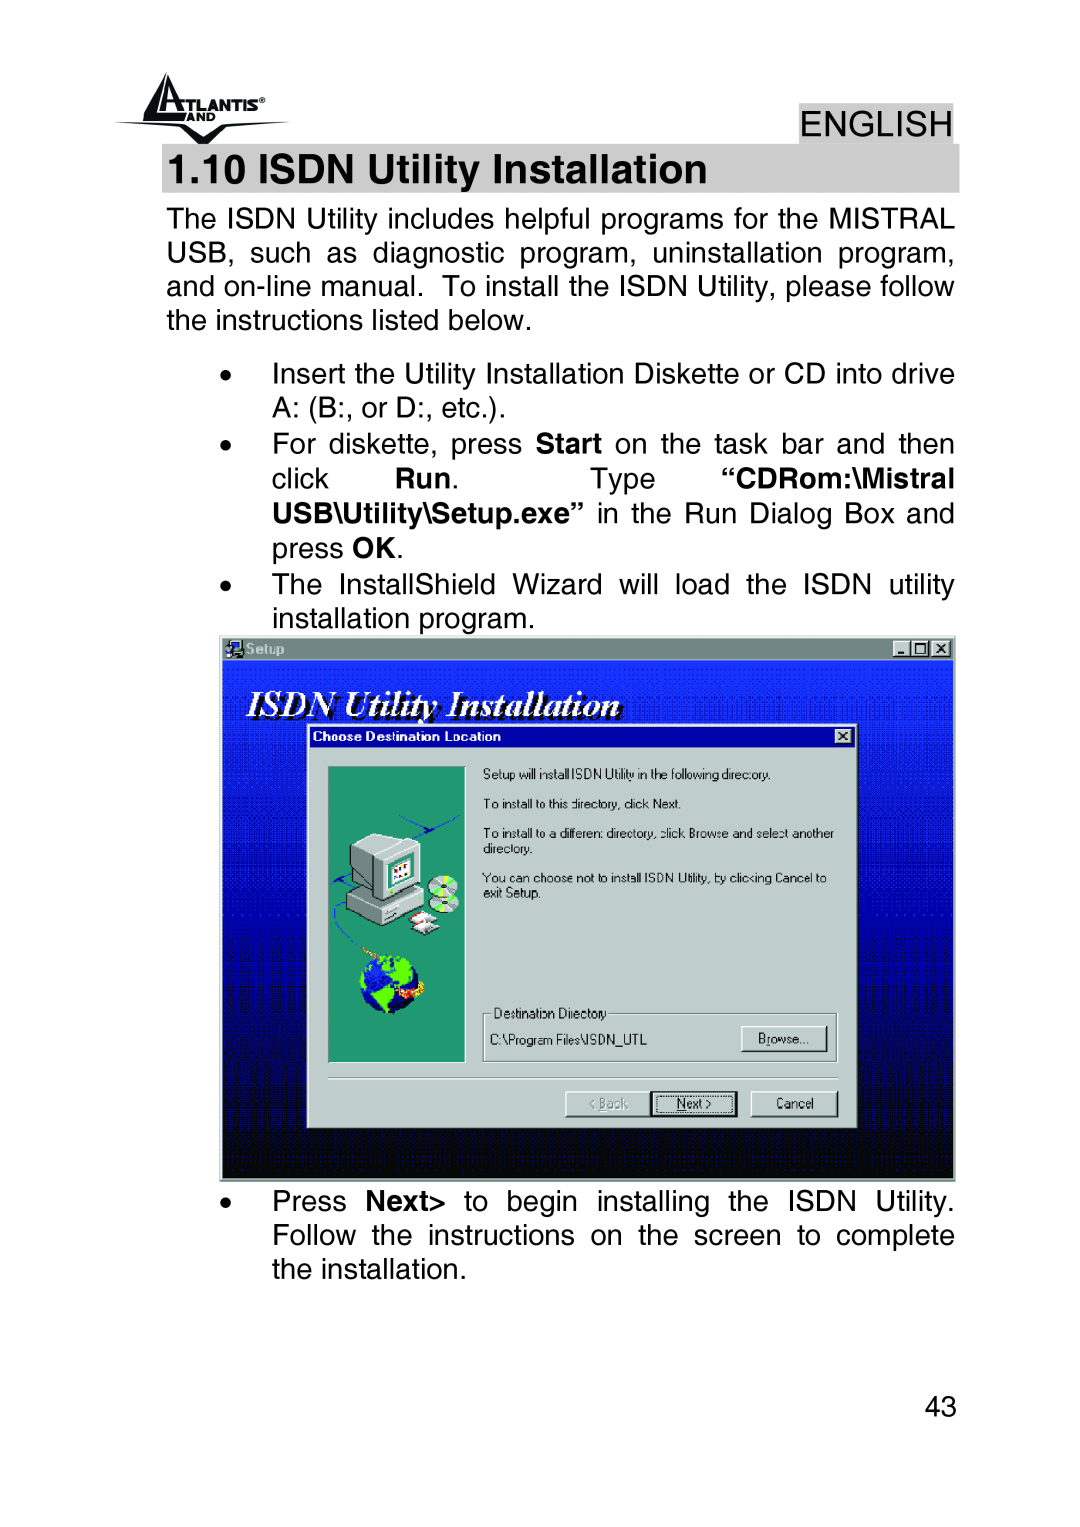 Atlantis Land A01-IU1 manual ISDN Utility Installation, click Run. Type “CDRom\Mistral 